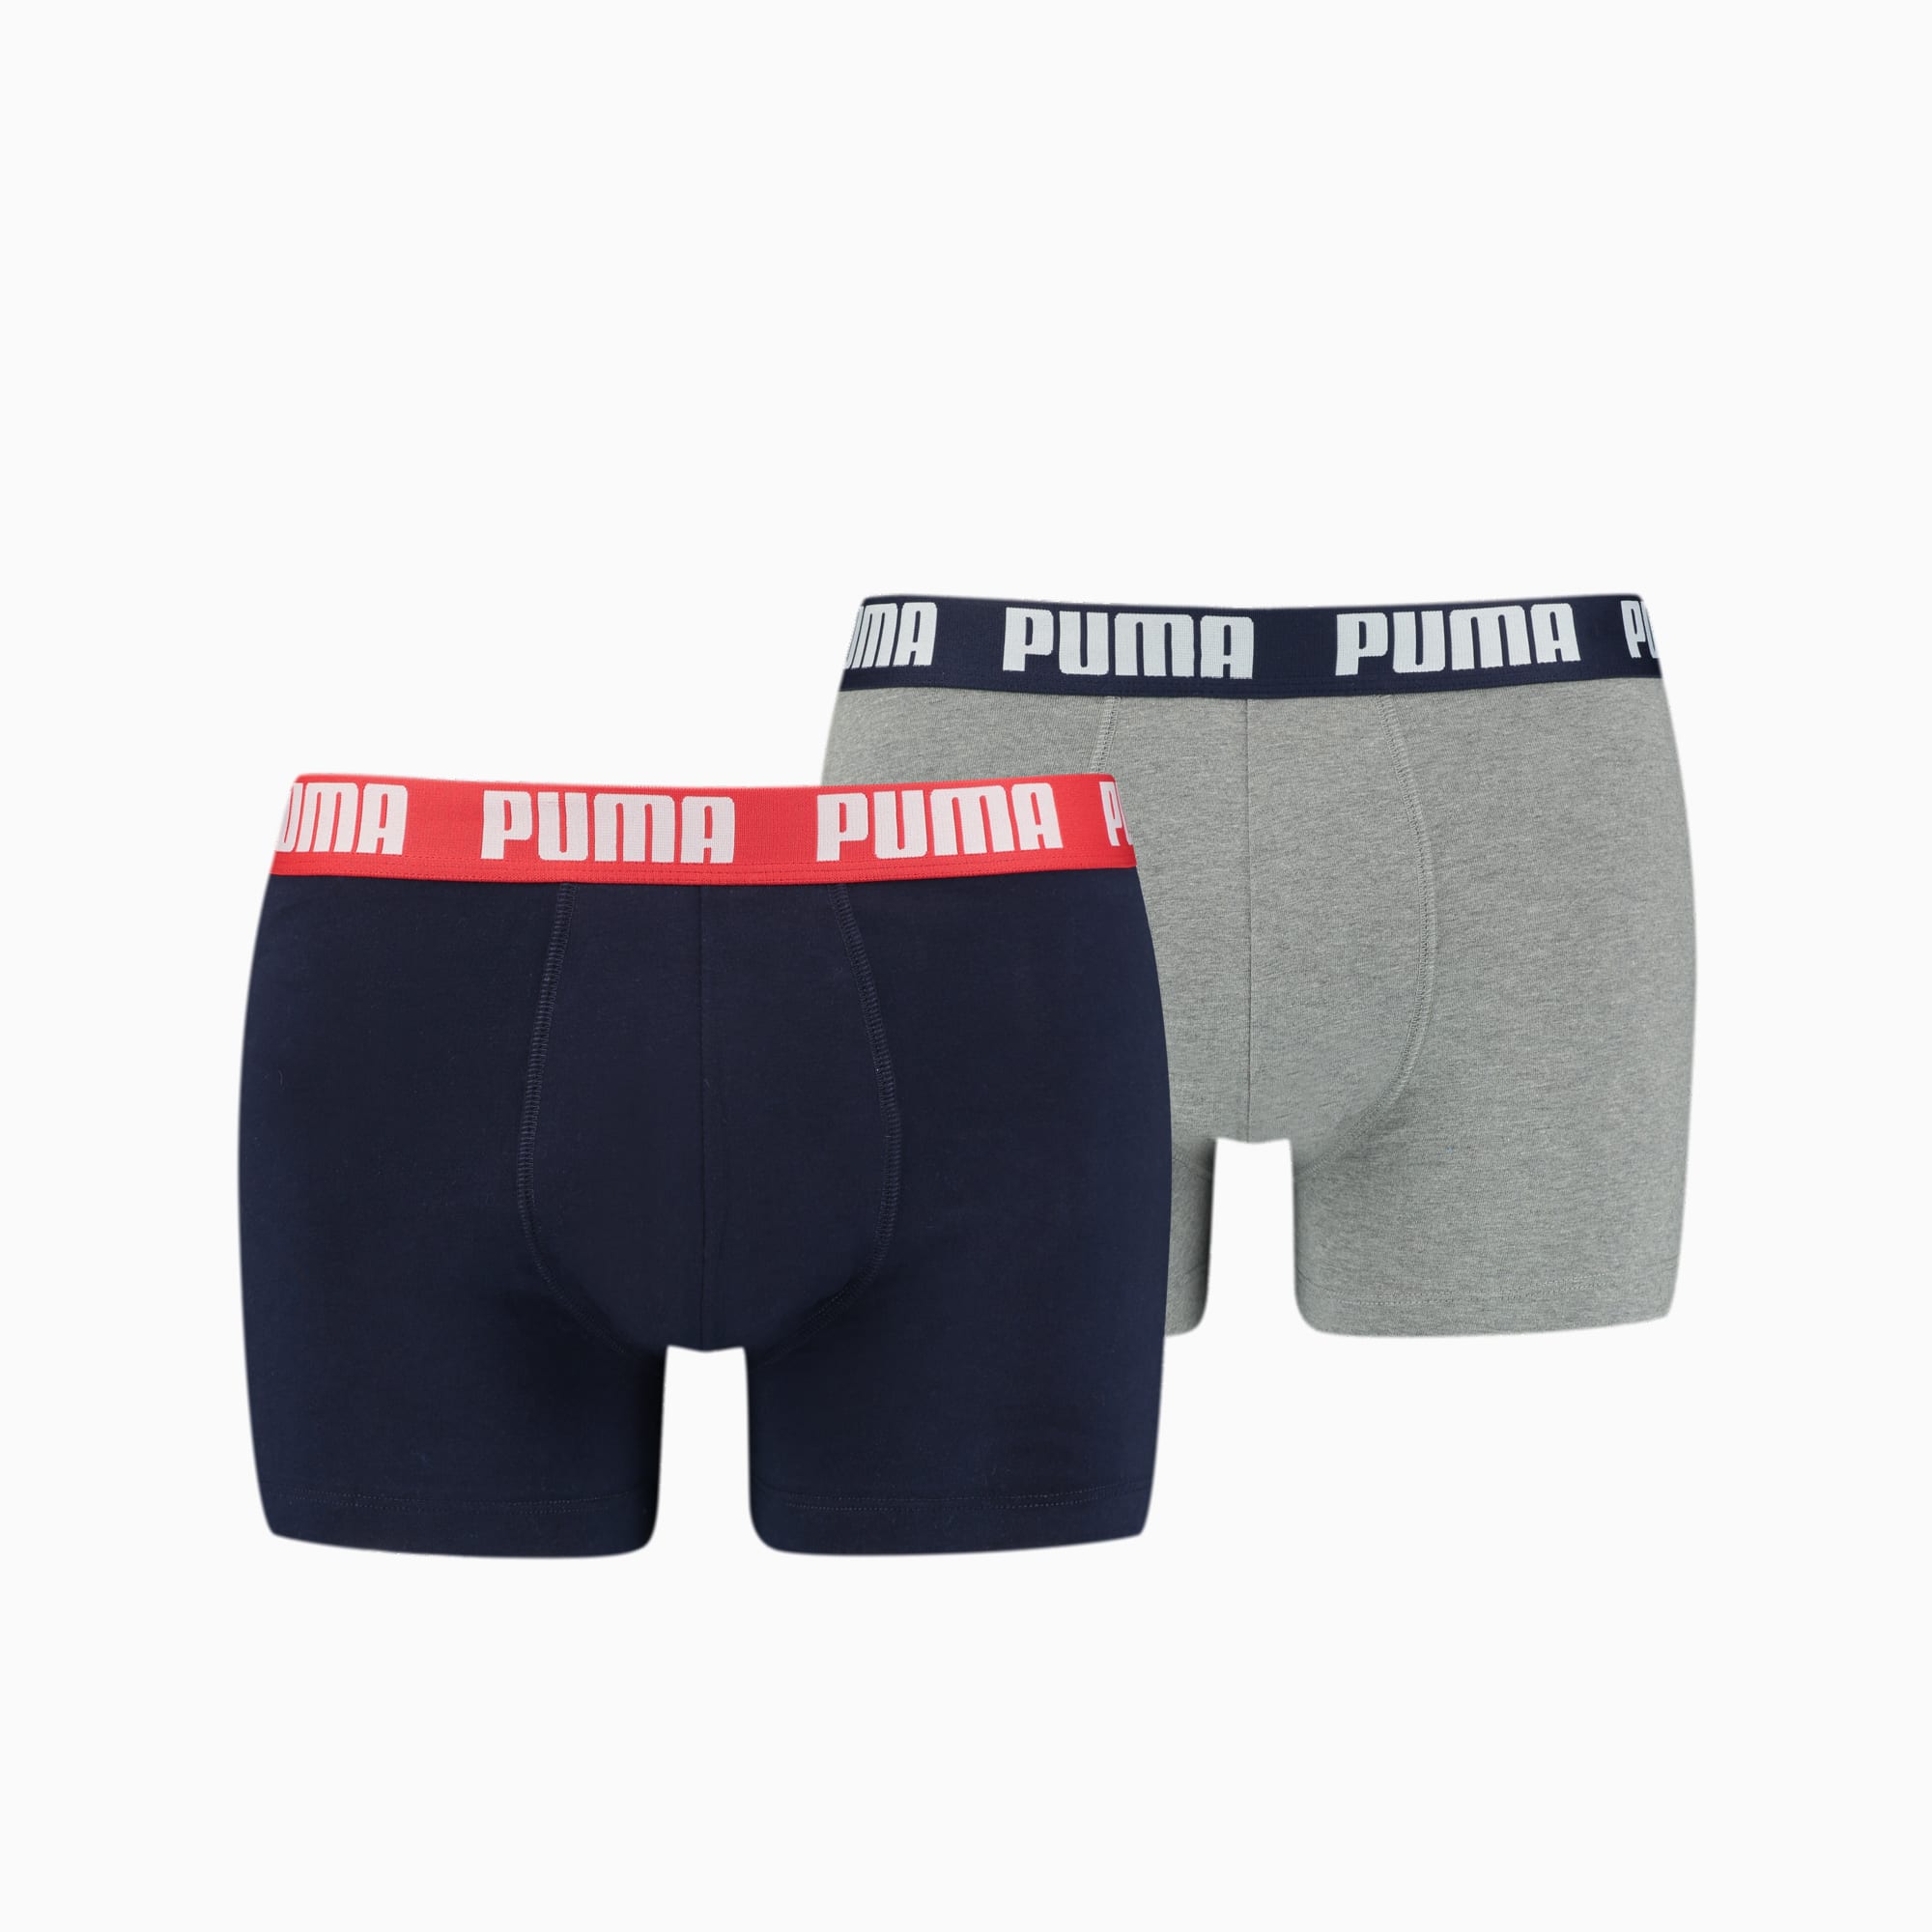 PUMA Basic Boxershorts Herren 2er-Pack, Mit Grau Melange, Grau/Blau, Größe: M, Kleidung